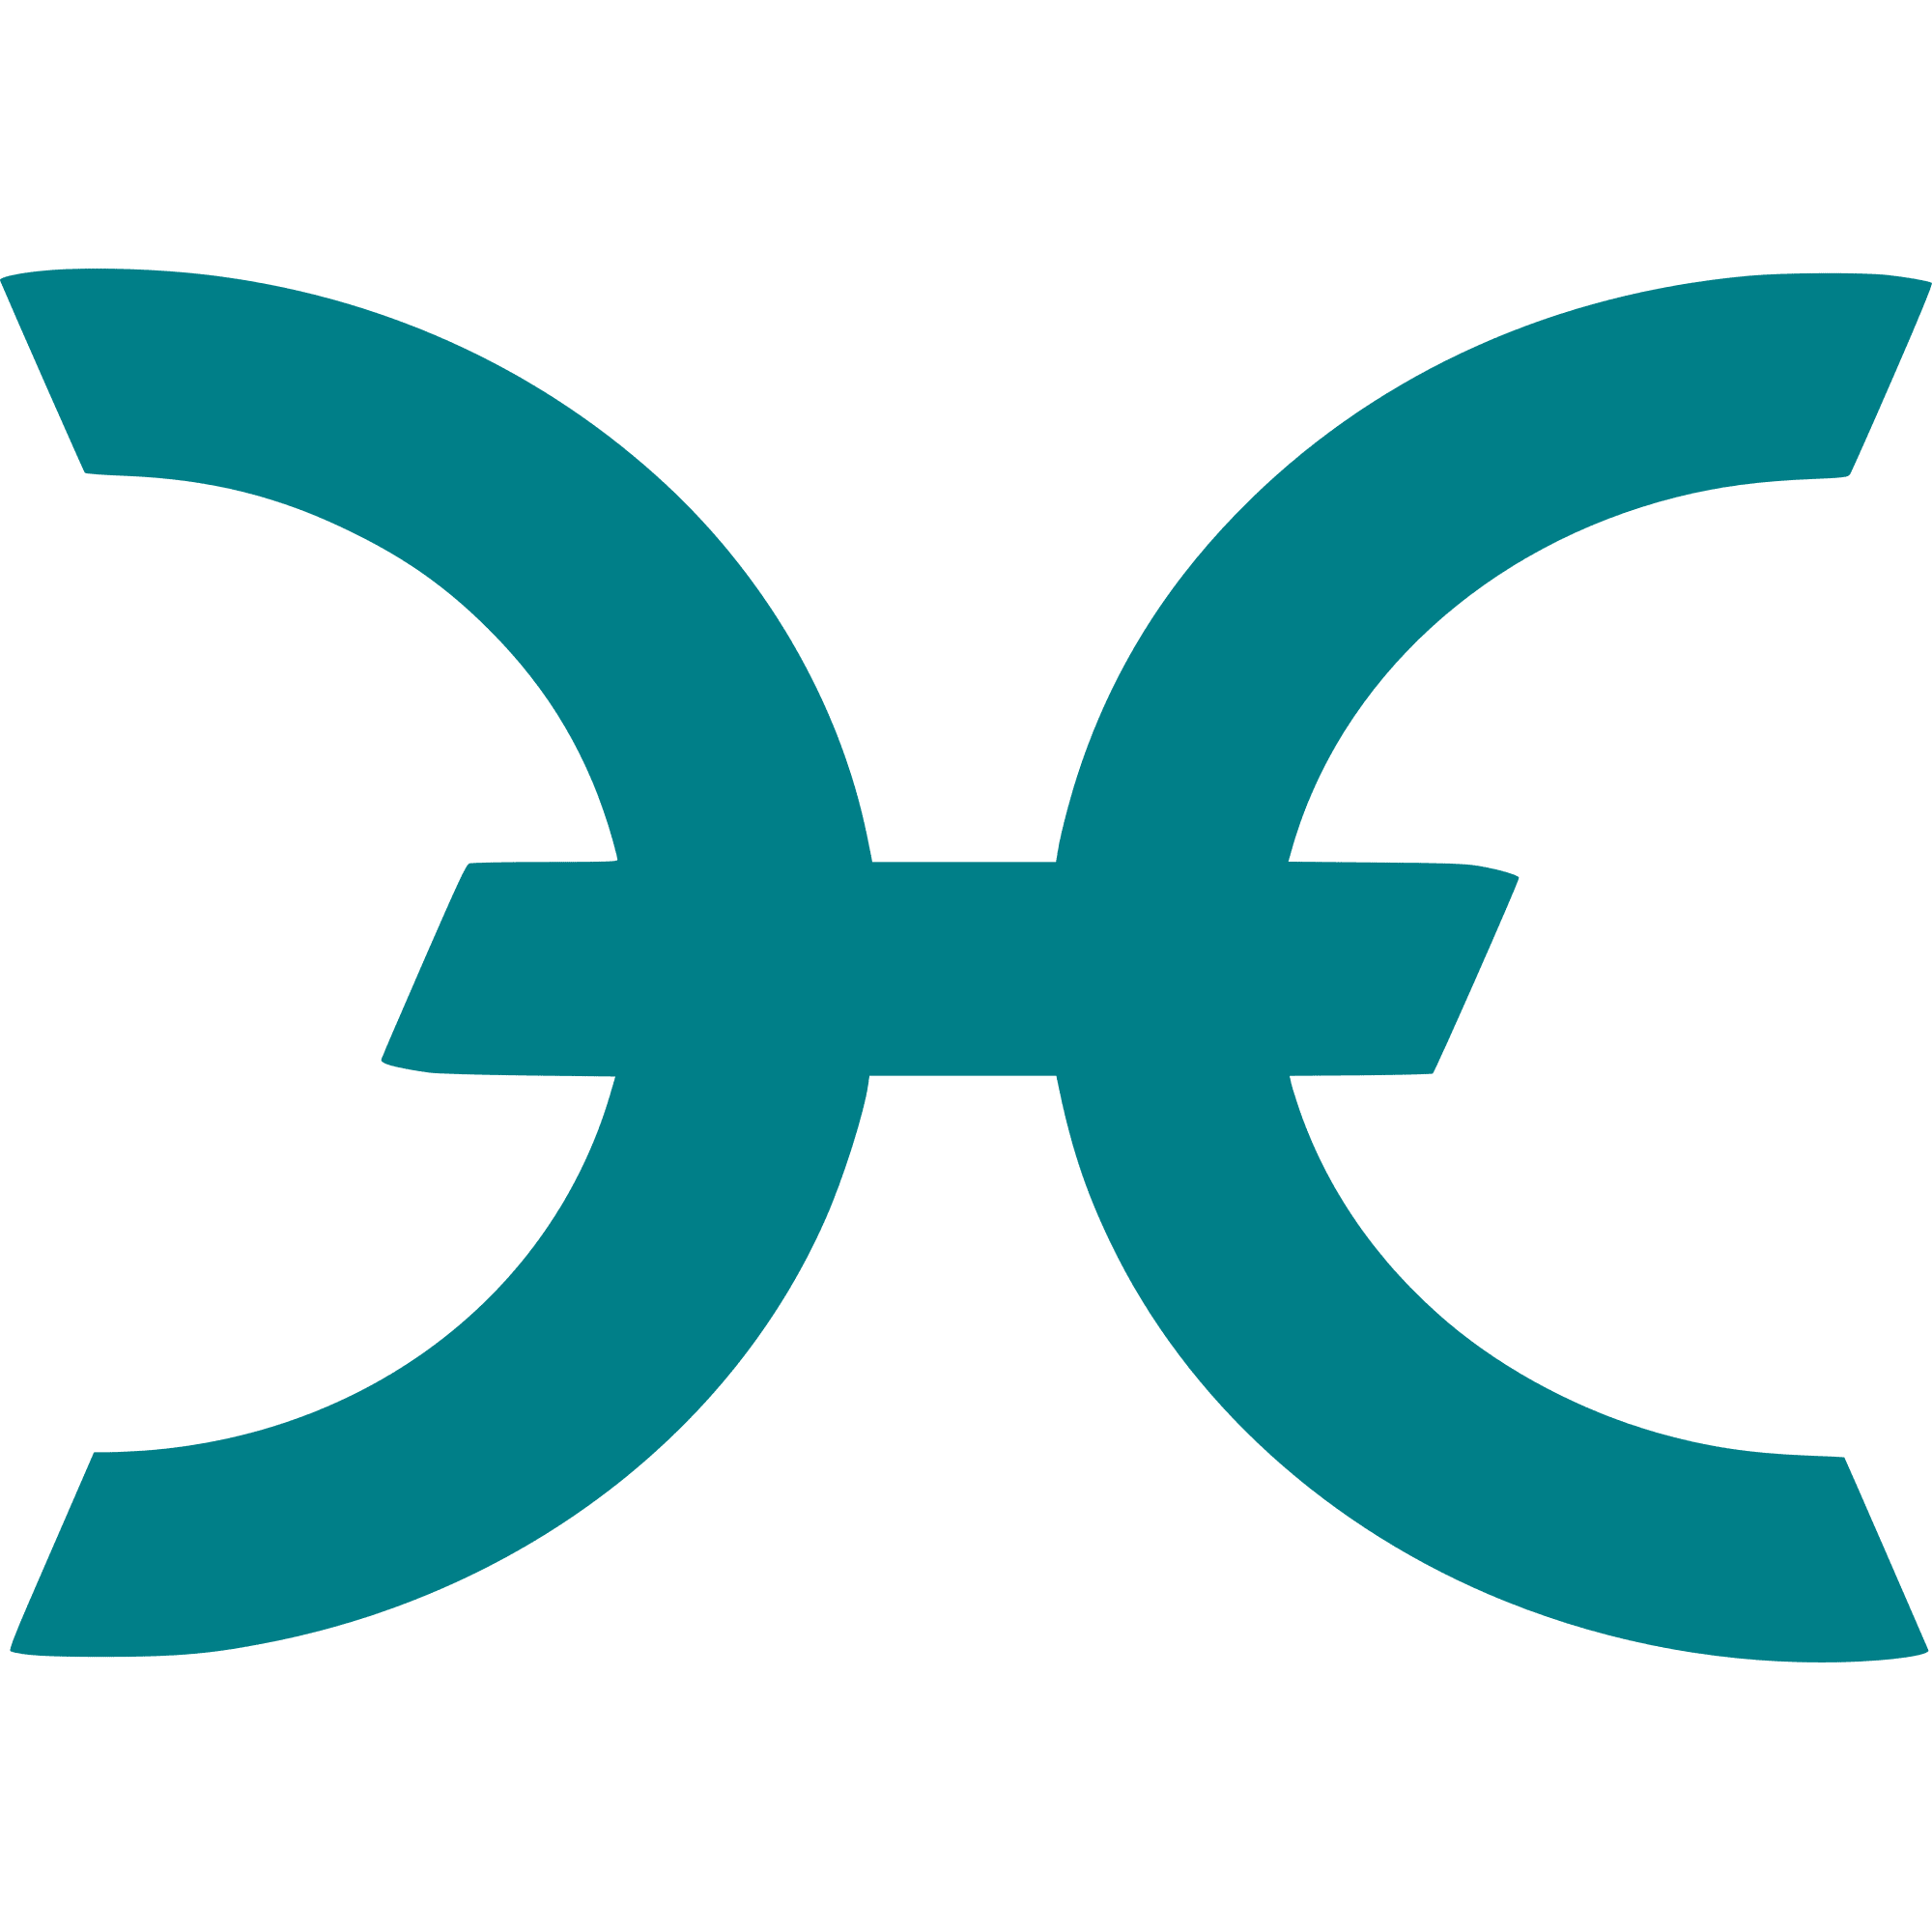 Holo (HOT) logo